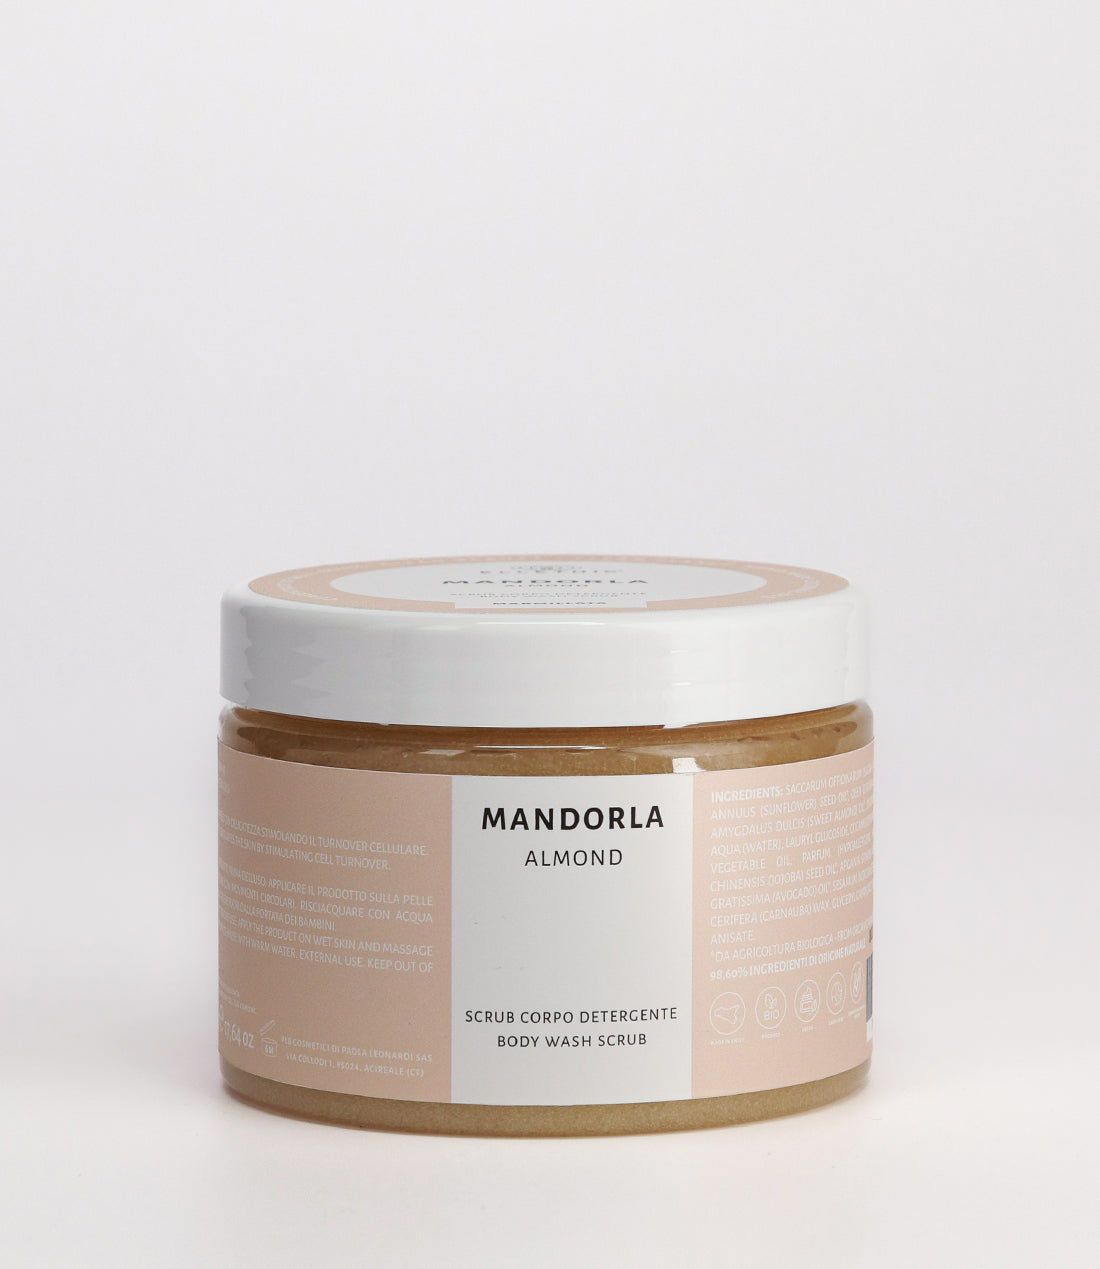 Scrub corpo detergente Mandorla 500g - Marmillata